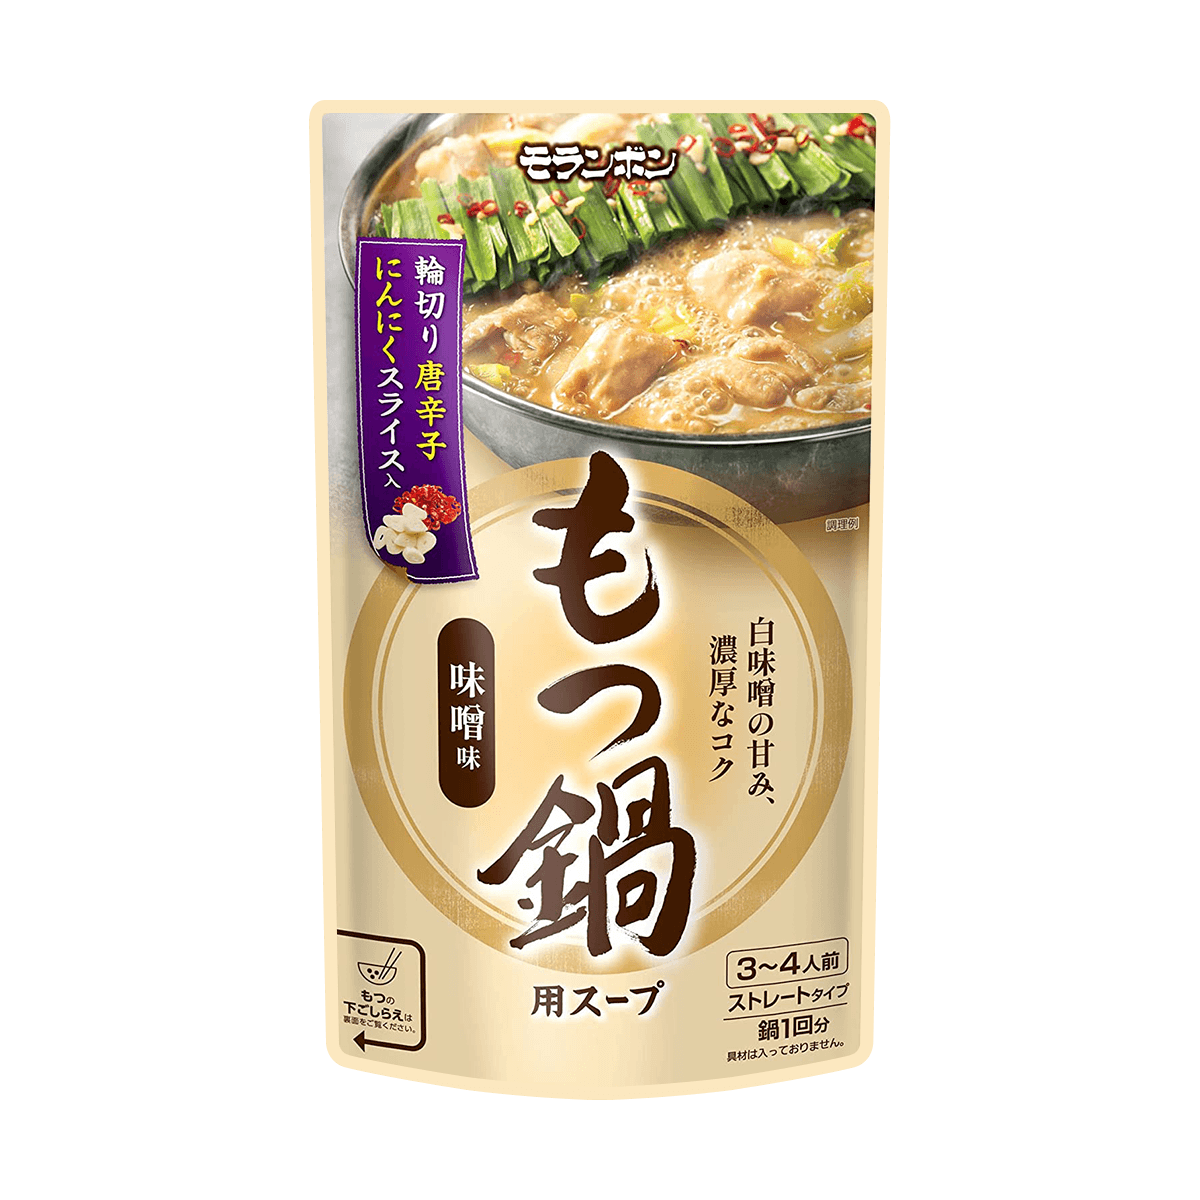 Japanese Miso Soup | Yami